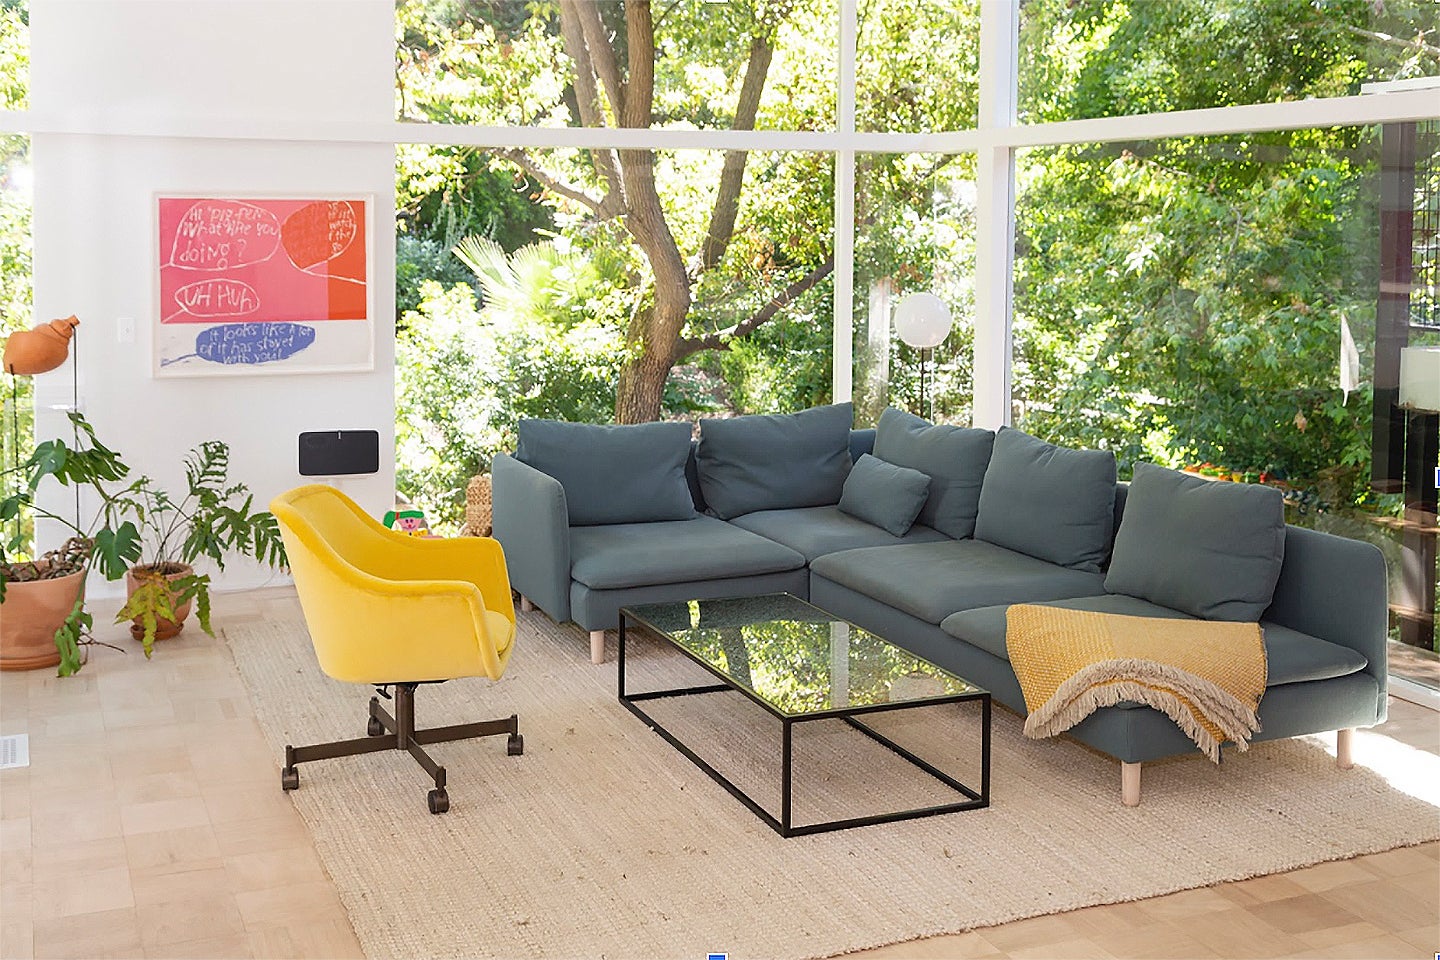 blue corner sofa, jute rug and yellow chair